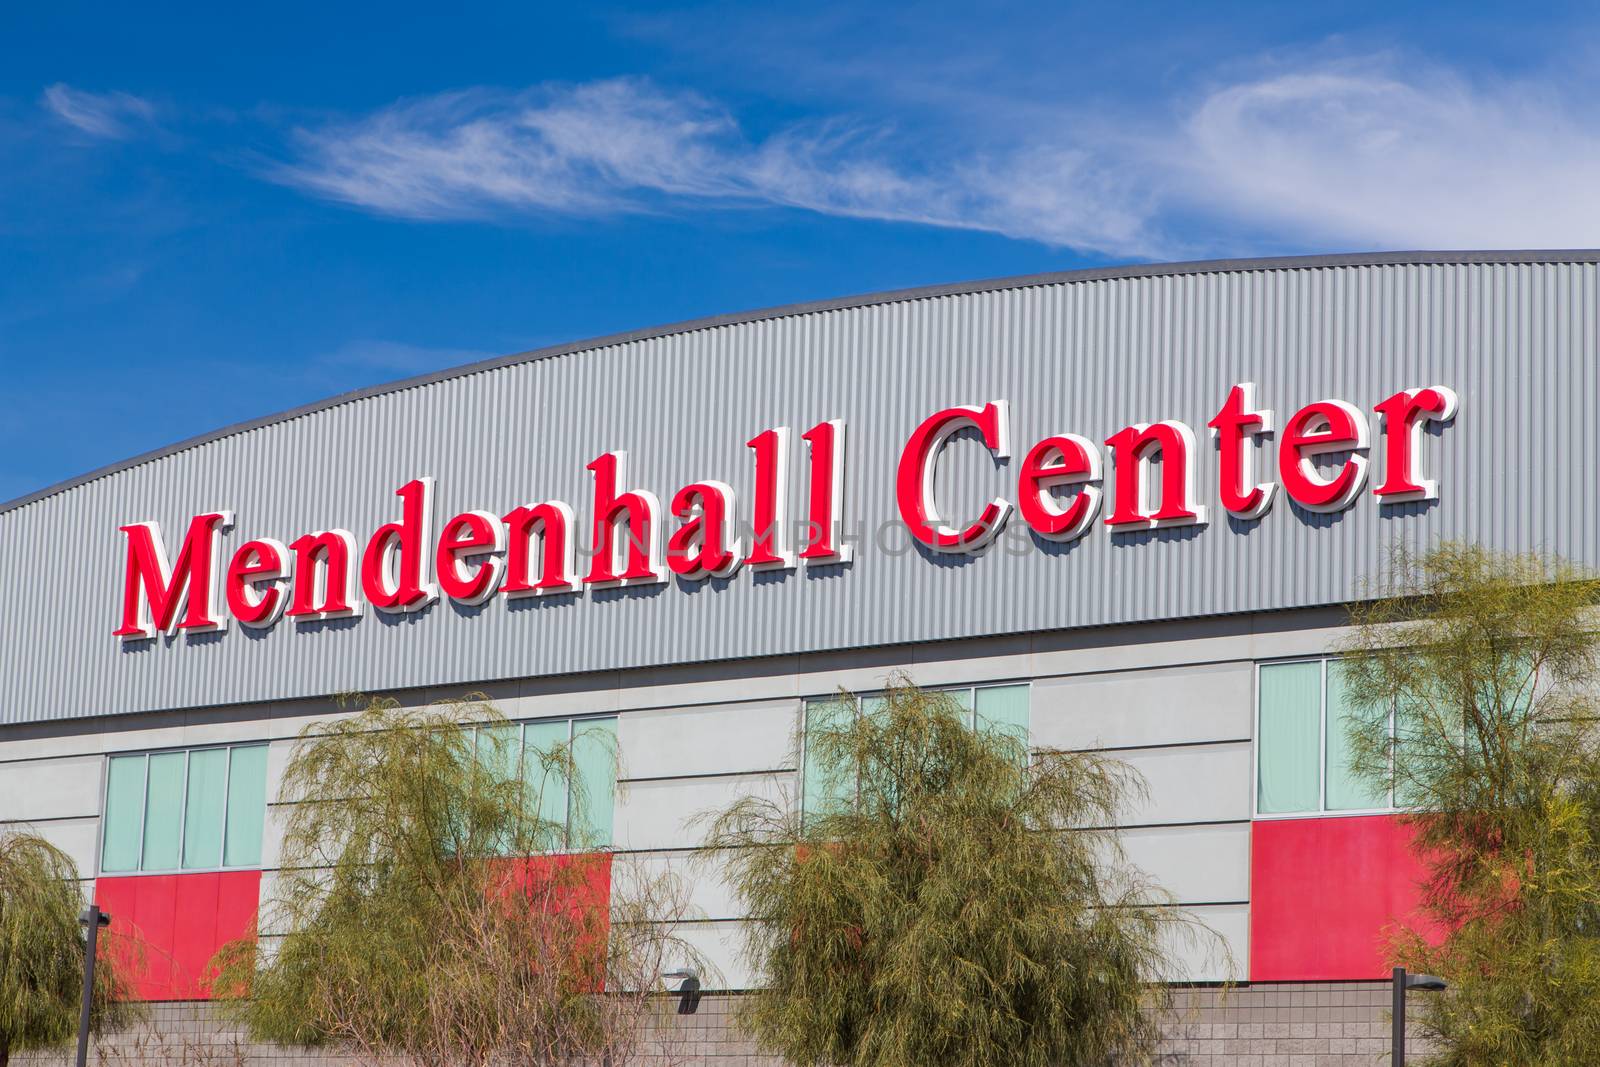 Mendenhall Center on Campus of University of Nevada, Las Vegas by wolterk